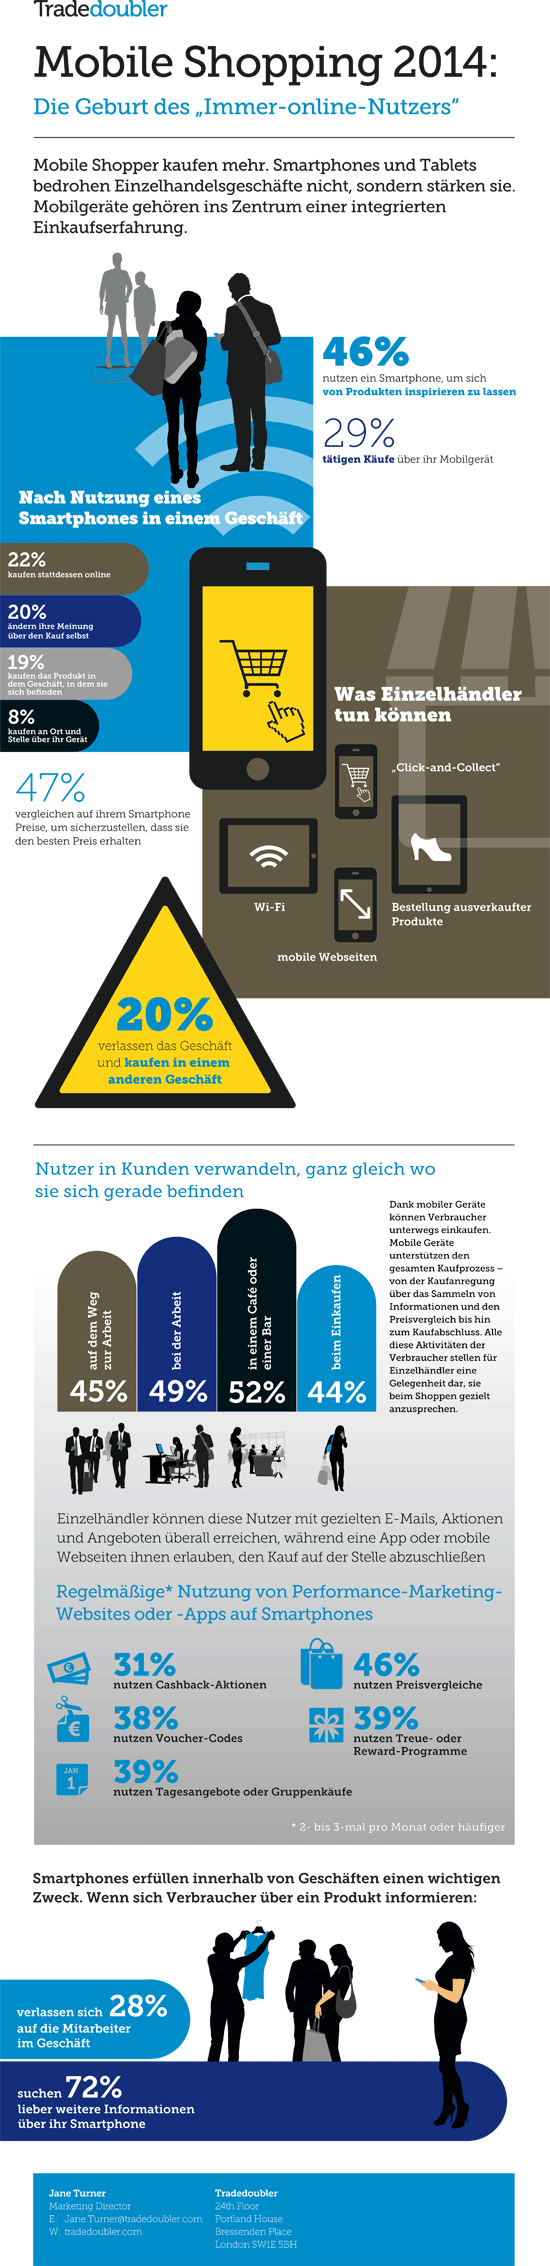 Infografik zur Studie Mobile Shopping 2014